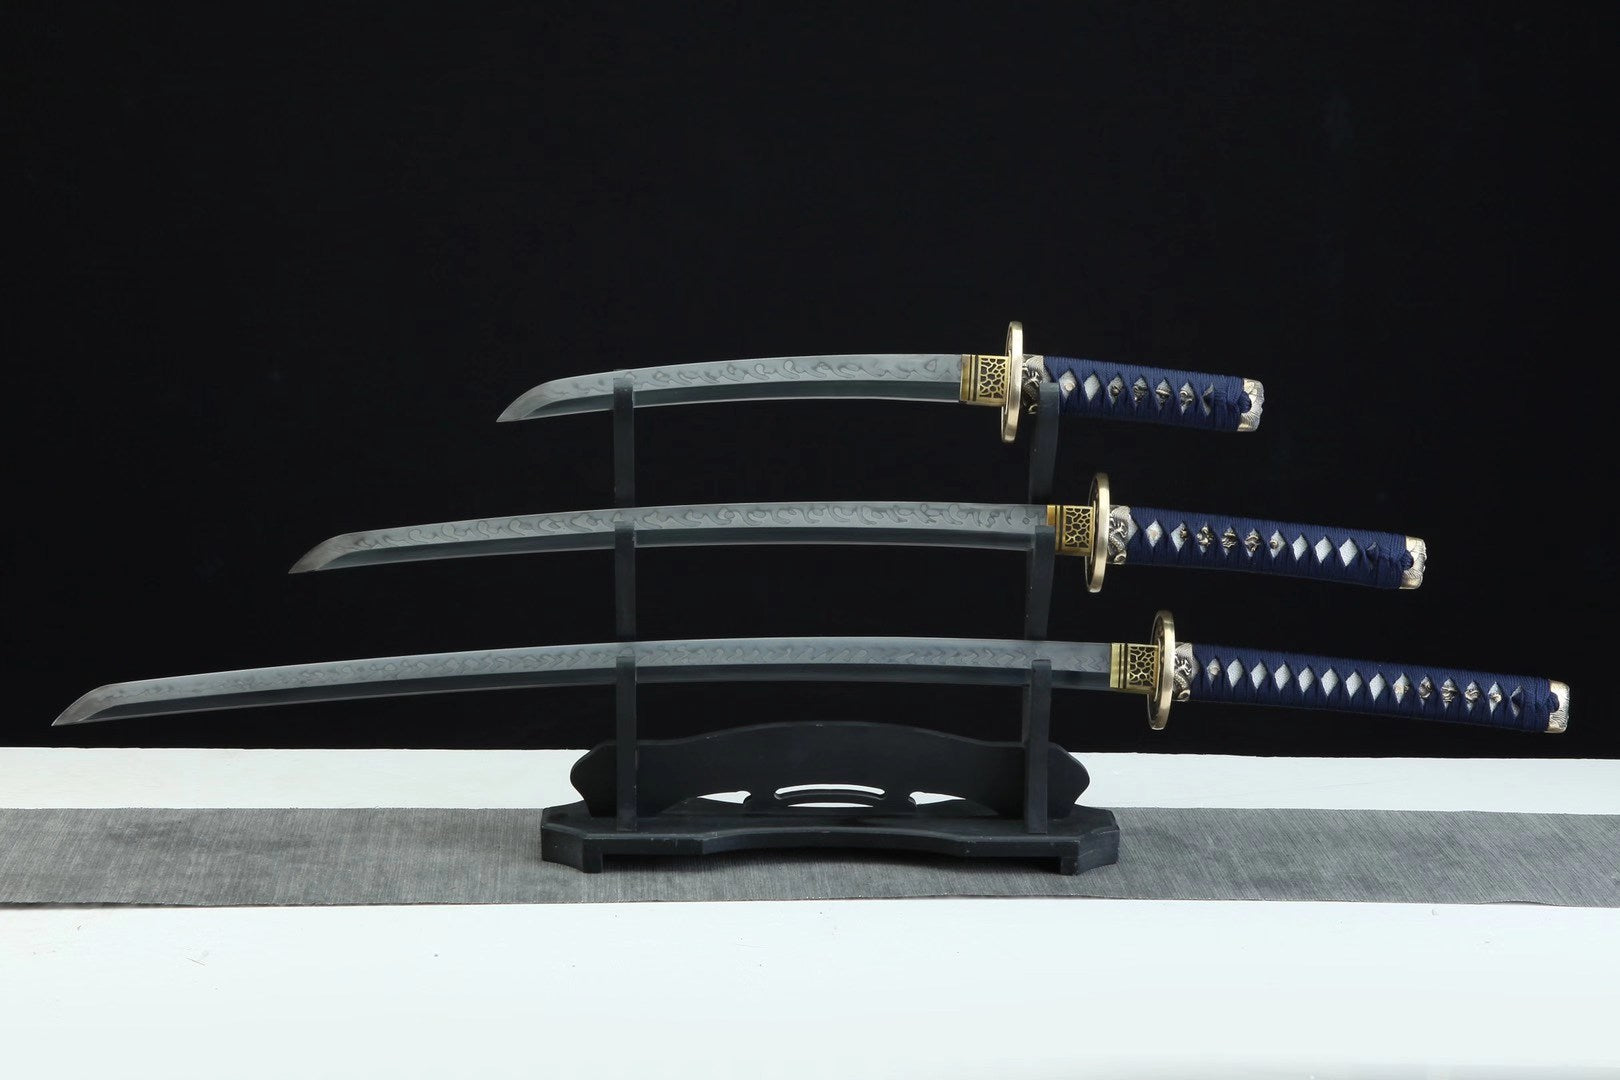 The Kogane Notoshi Handmade Katana Set Clay Tempered T10 Steel